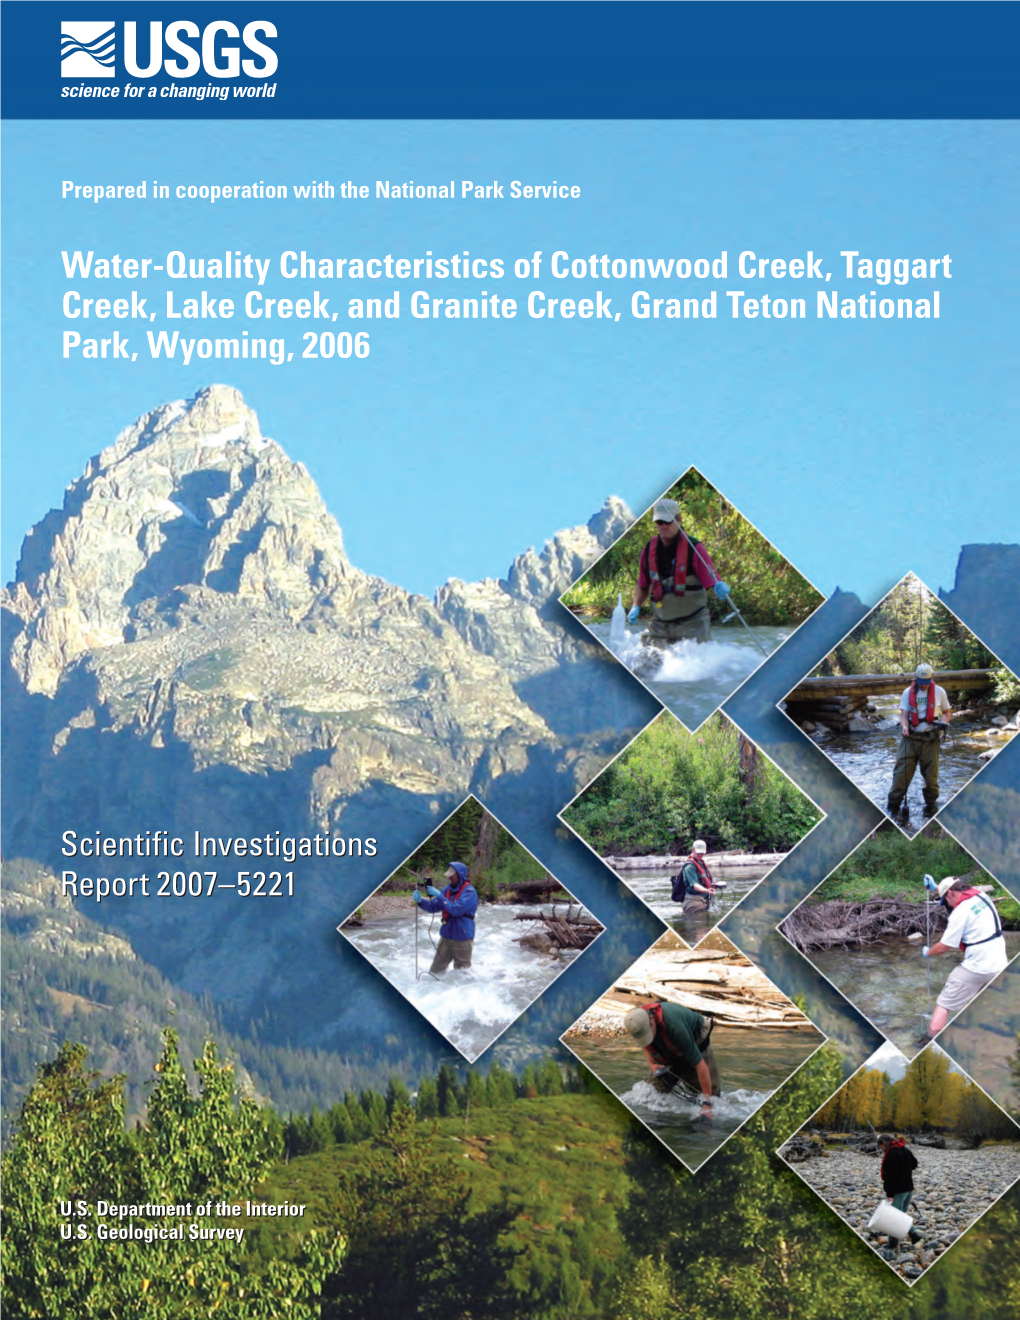 Water-Quality Characteristics of Cottonwood Creek, Taggart Creek, Lake Creek, and Granite Creek, Grand Teton National Park, Wyoming, 2006